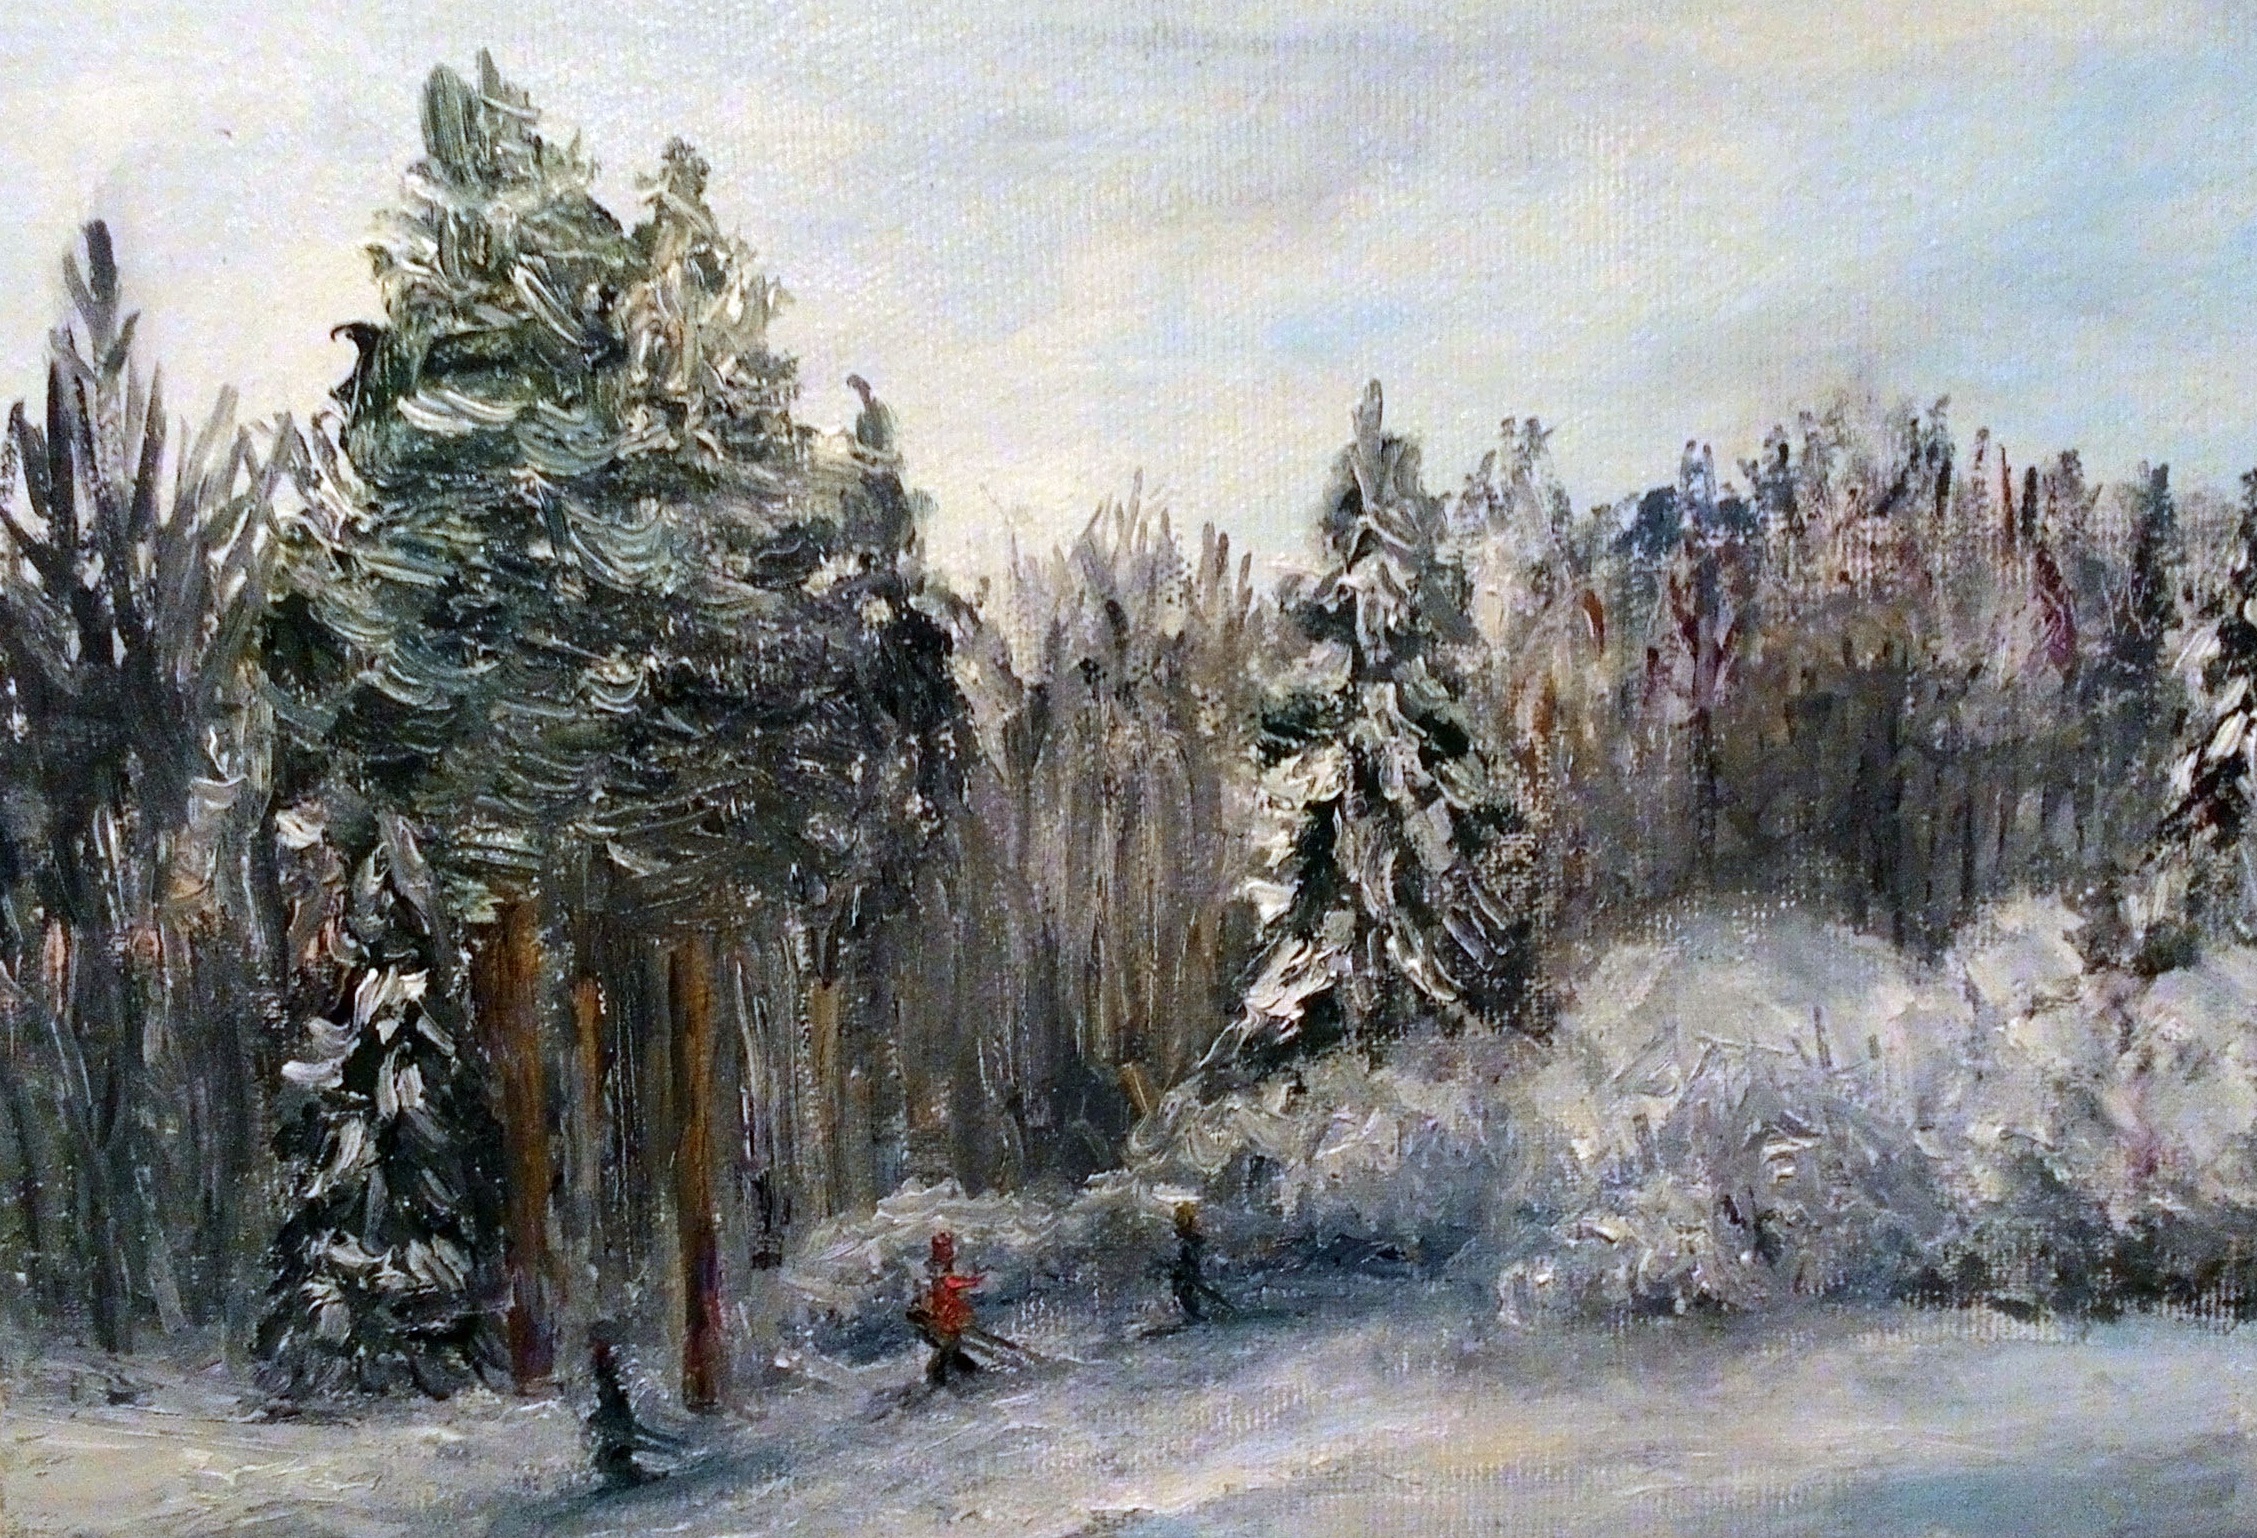 Egorova Alexandra
Winter holiday
2016
Oil on canvas
